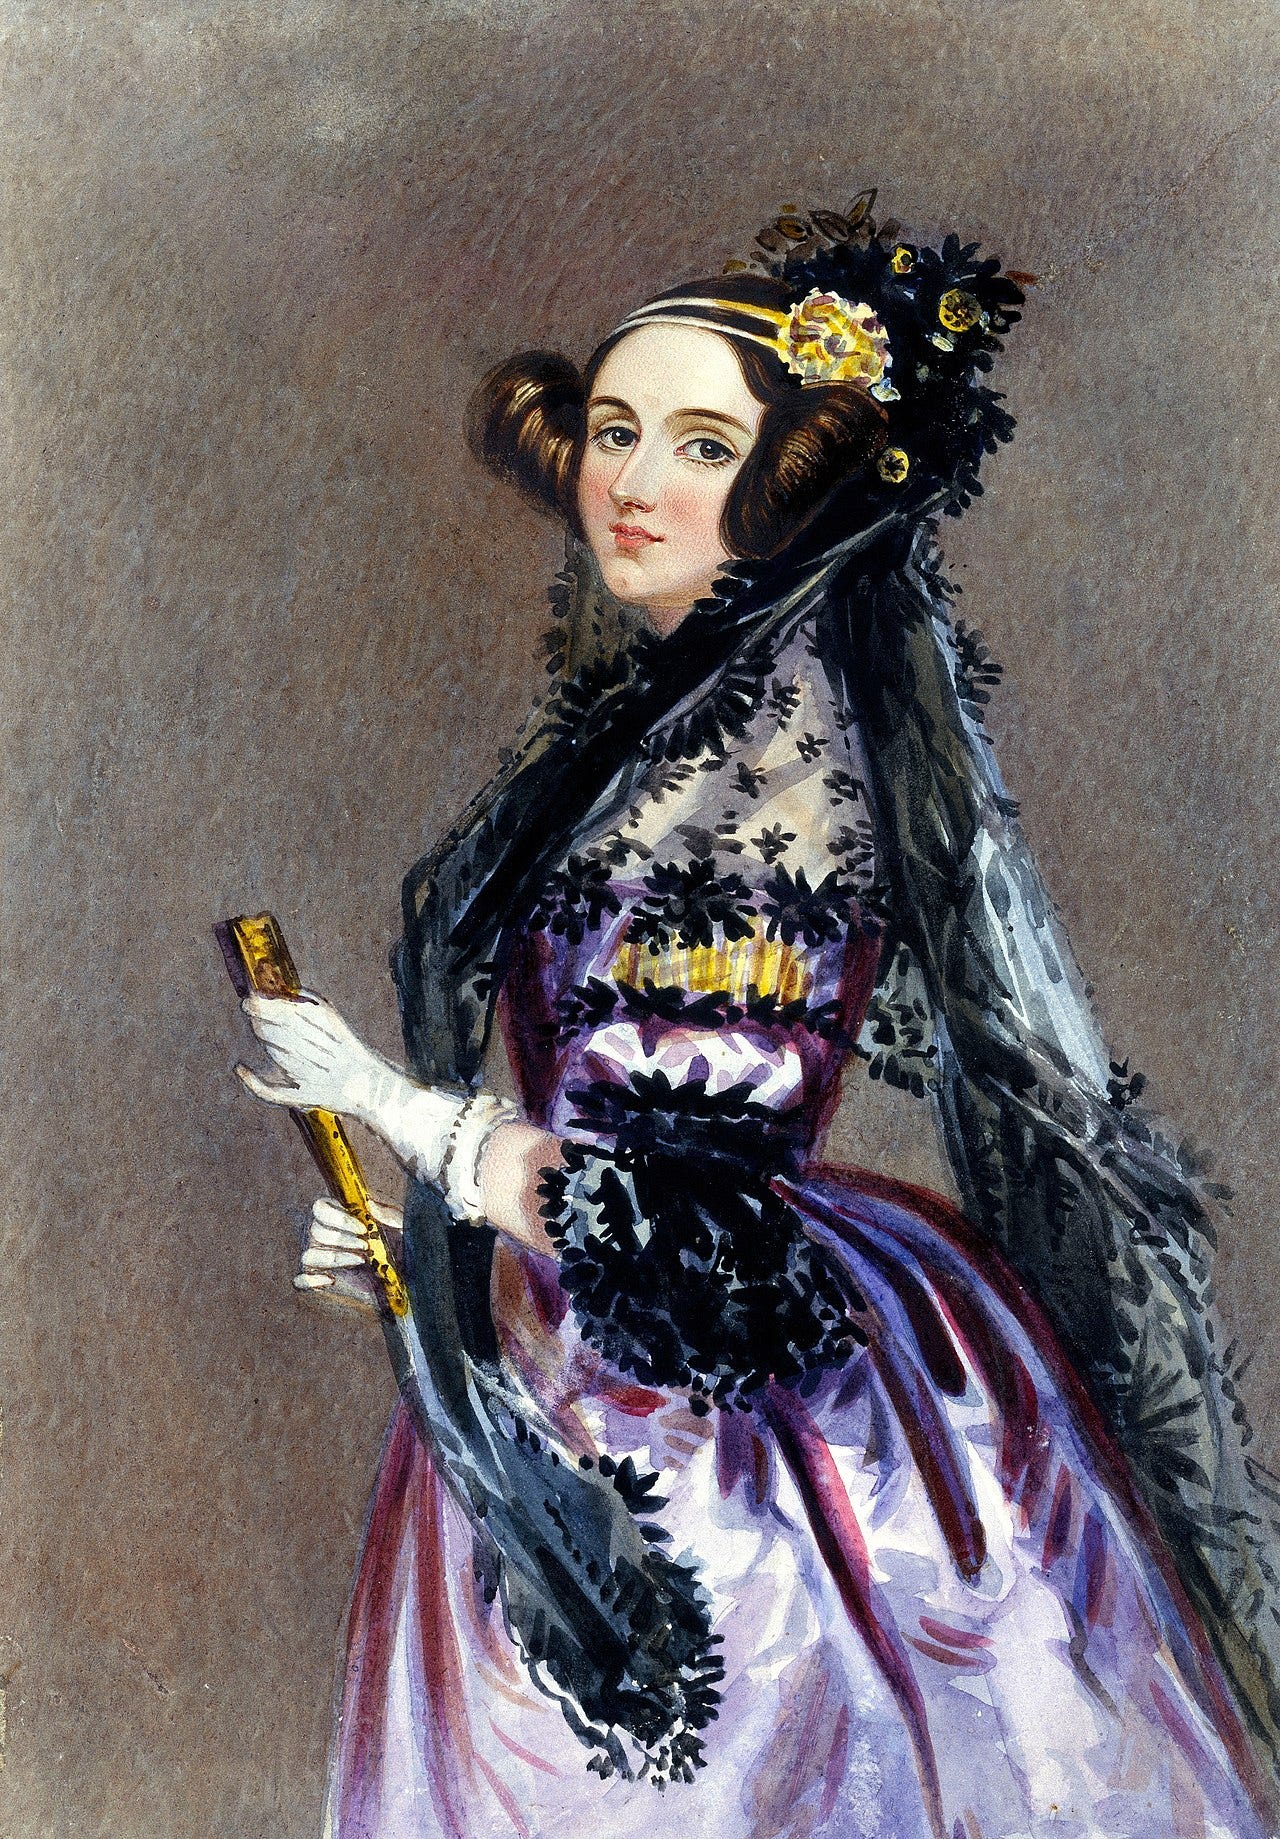 Ada King, Countess of Lovelace. Watercolour portrait circa 1840